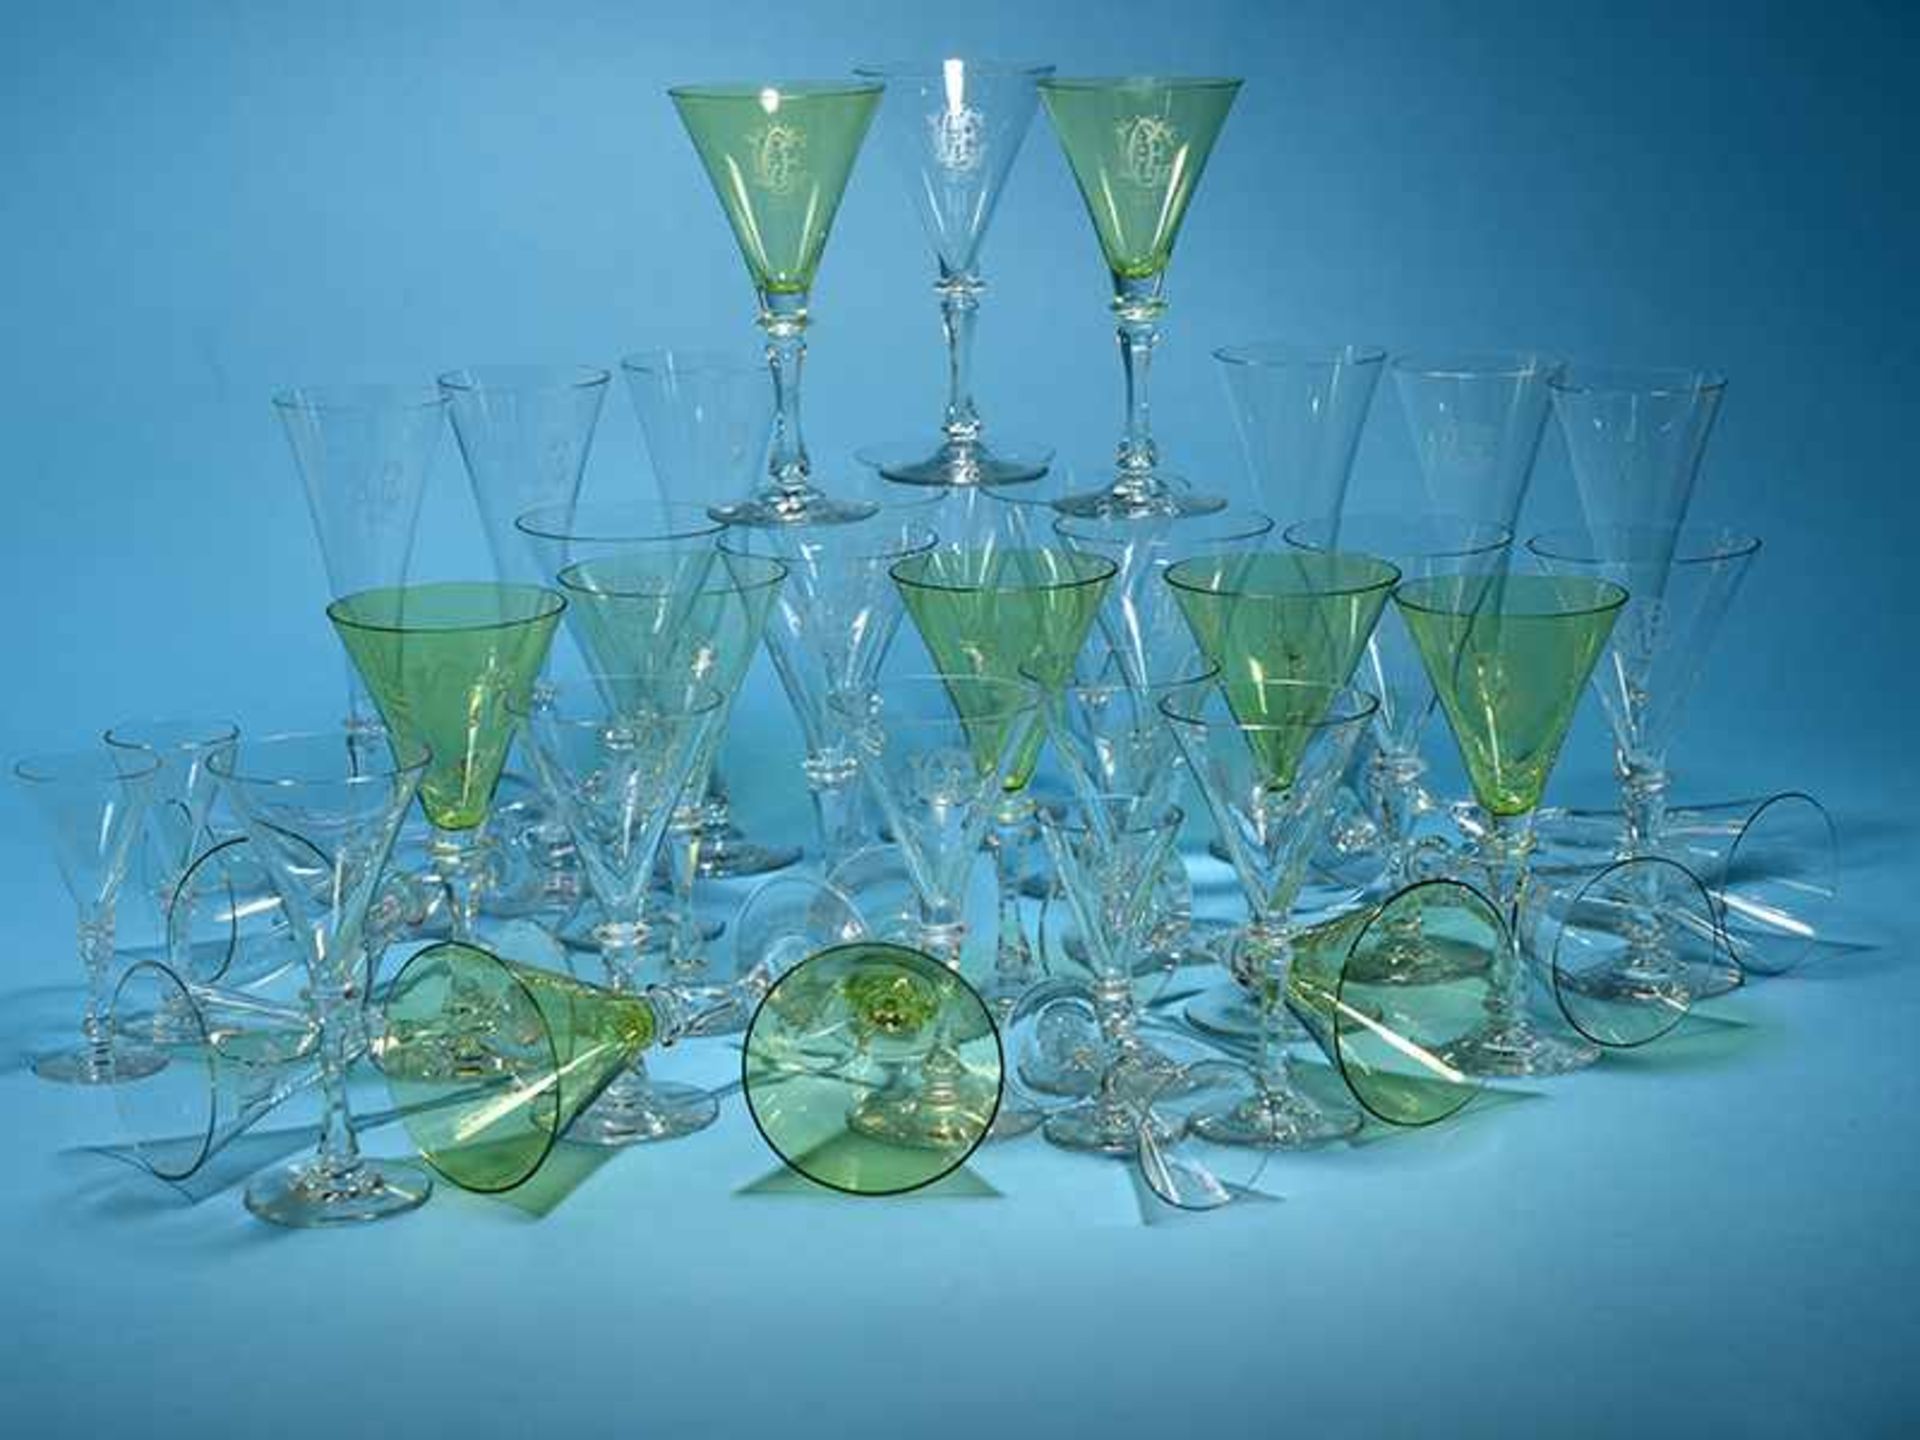 39-tlg. Gläser-Serie, monogrammiert "LGE", 1904/1911. Farbloses u teils grünfarbiges Glas, jeweils